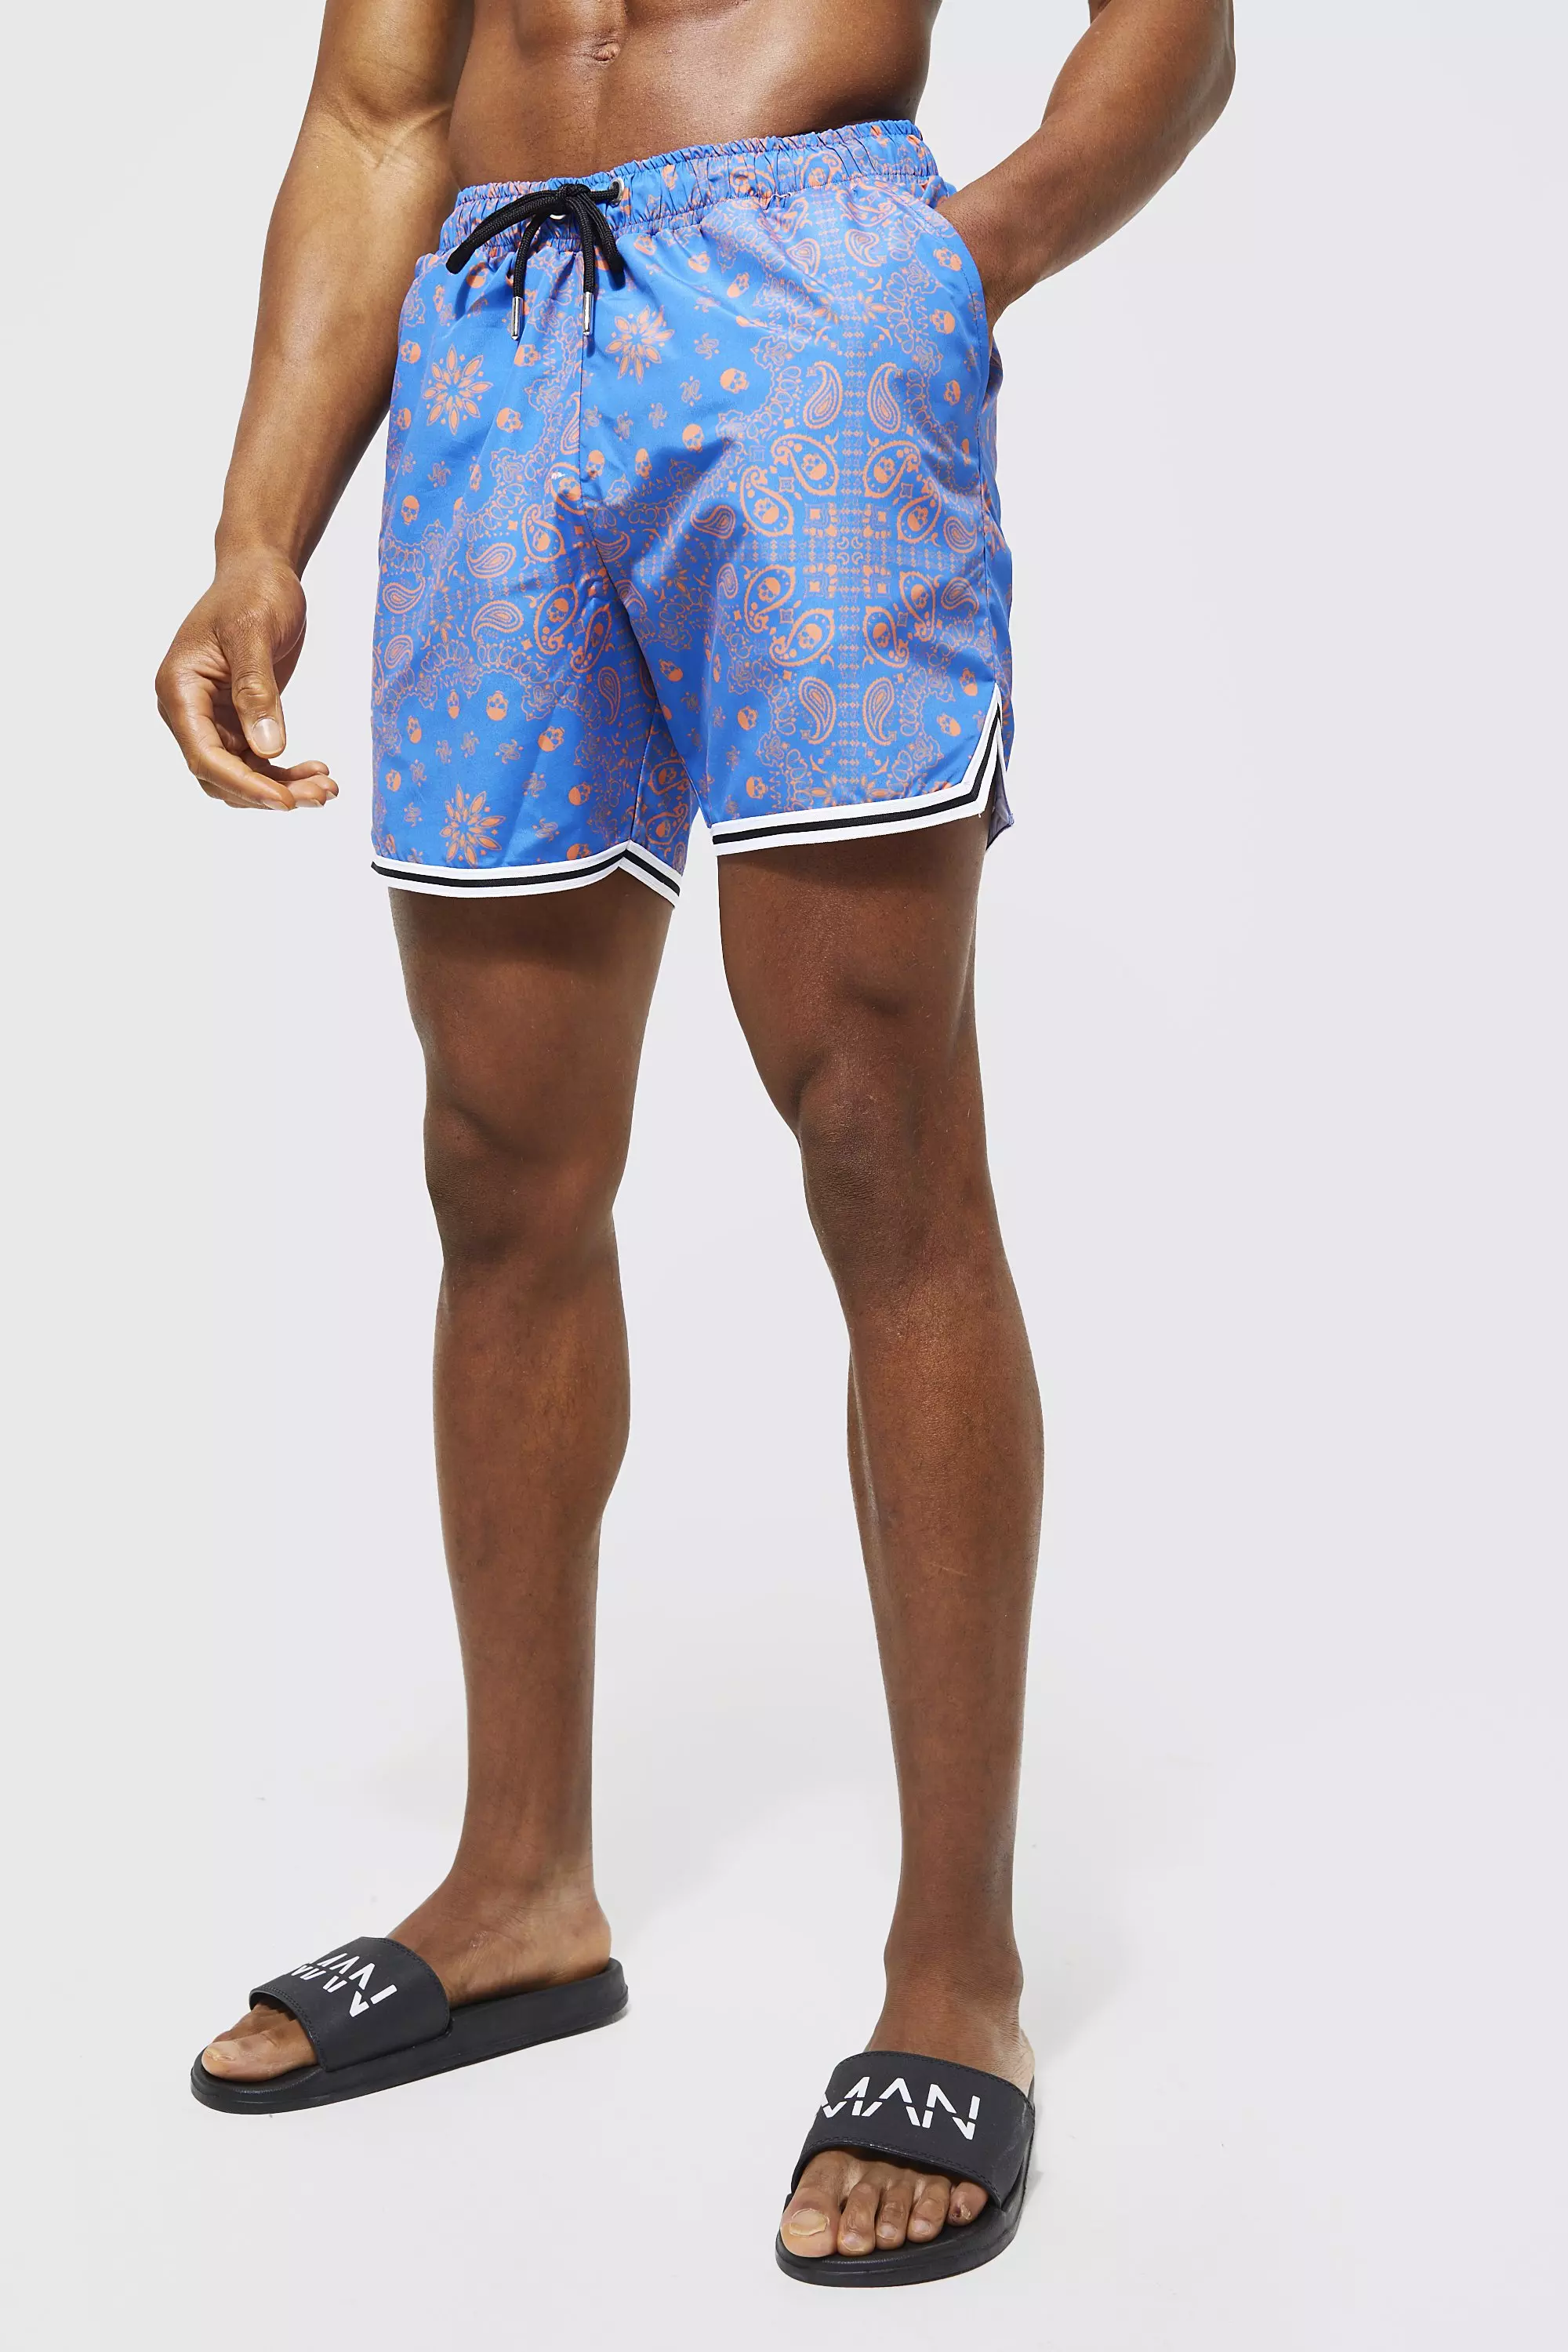 Mens Louis Vuitton Bandana Board Shorts Swim Suit